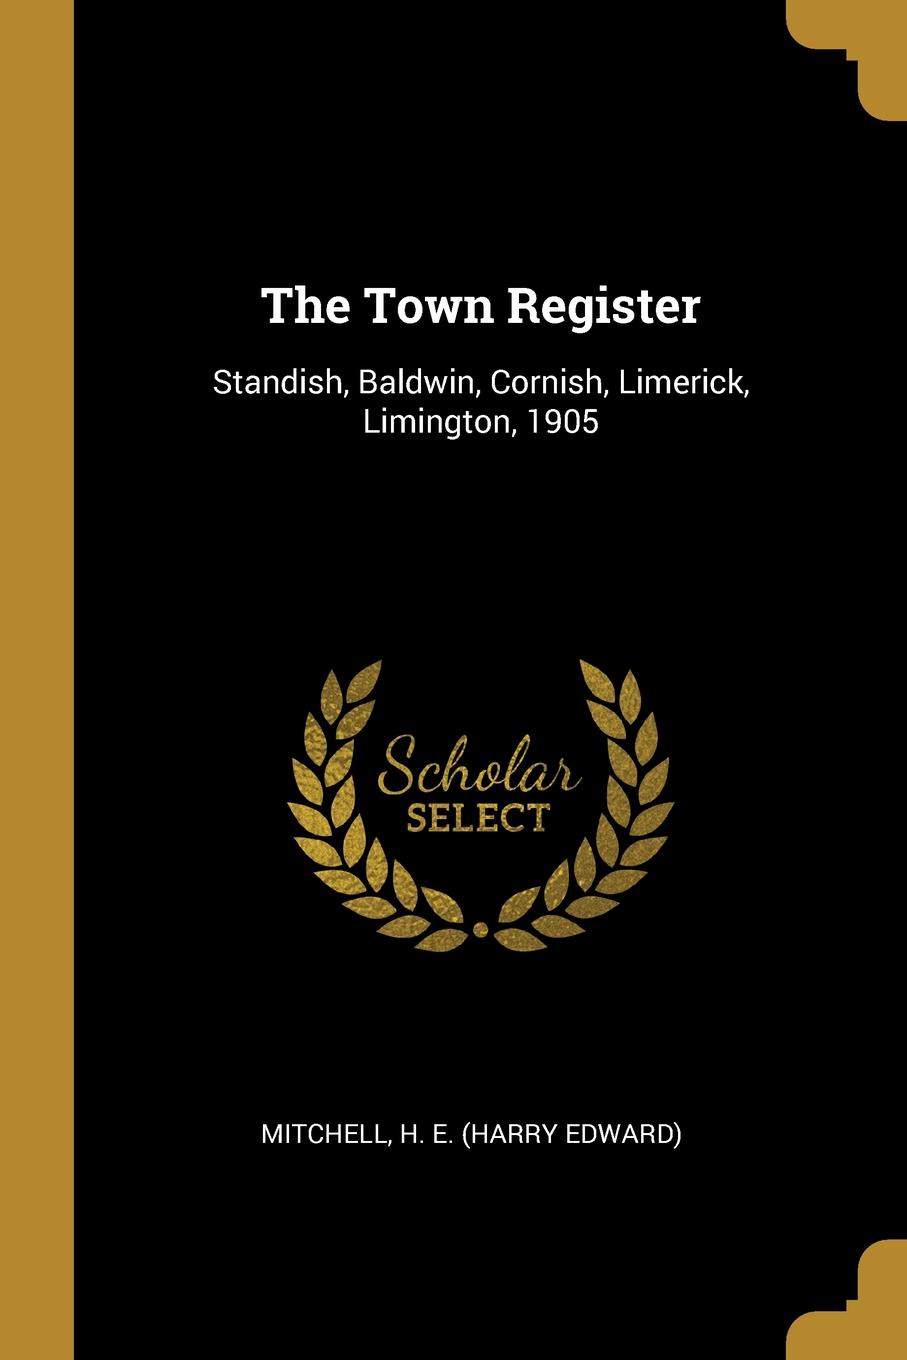 The Town Register. Standish, Baldwin, Cornish, Limerick, Limington, 1905